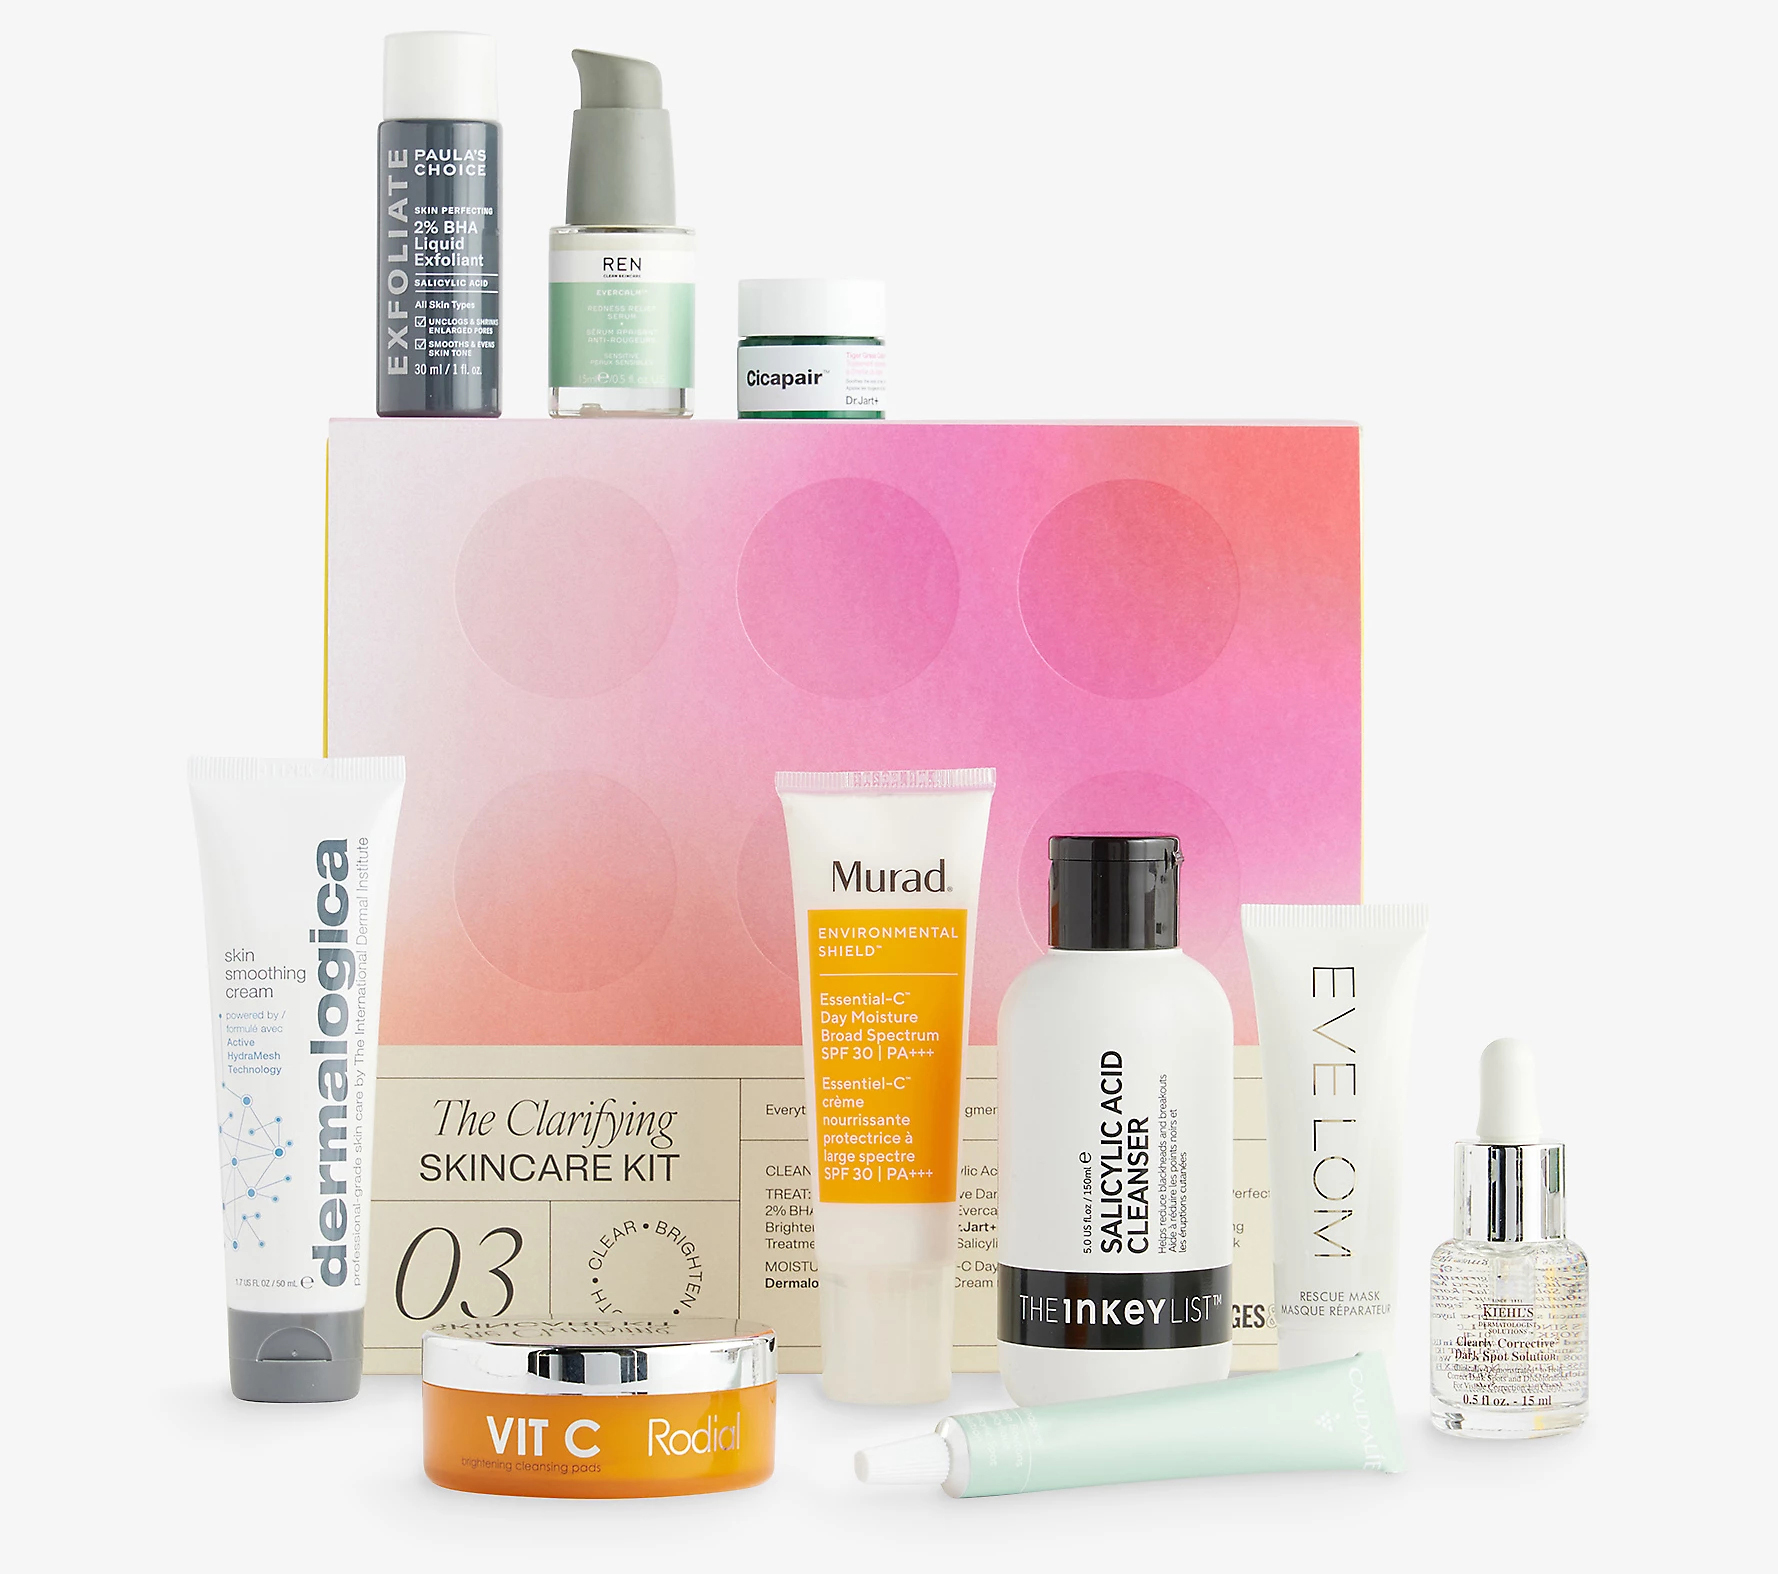 Selfridges The Clarifying Skincare Kit beauty bundle